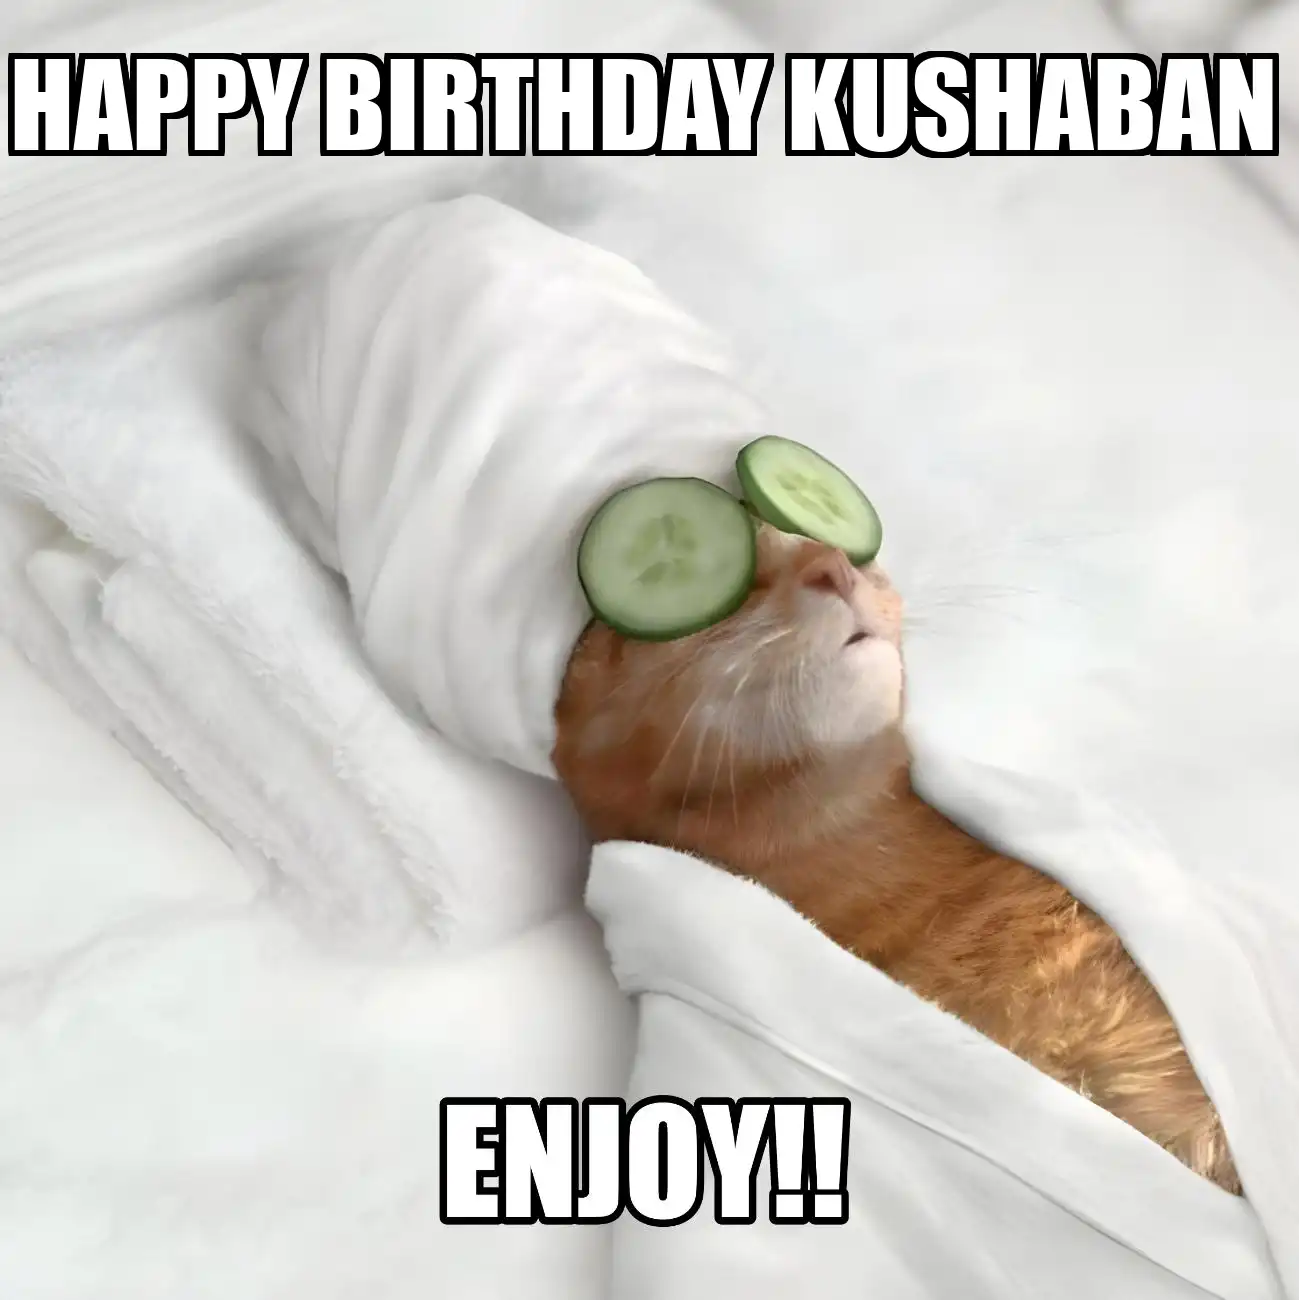 Happy Birthday Kushaban Enjoy Cat Meme